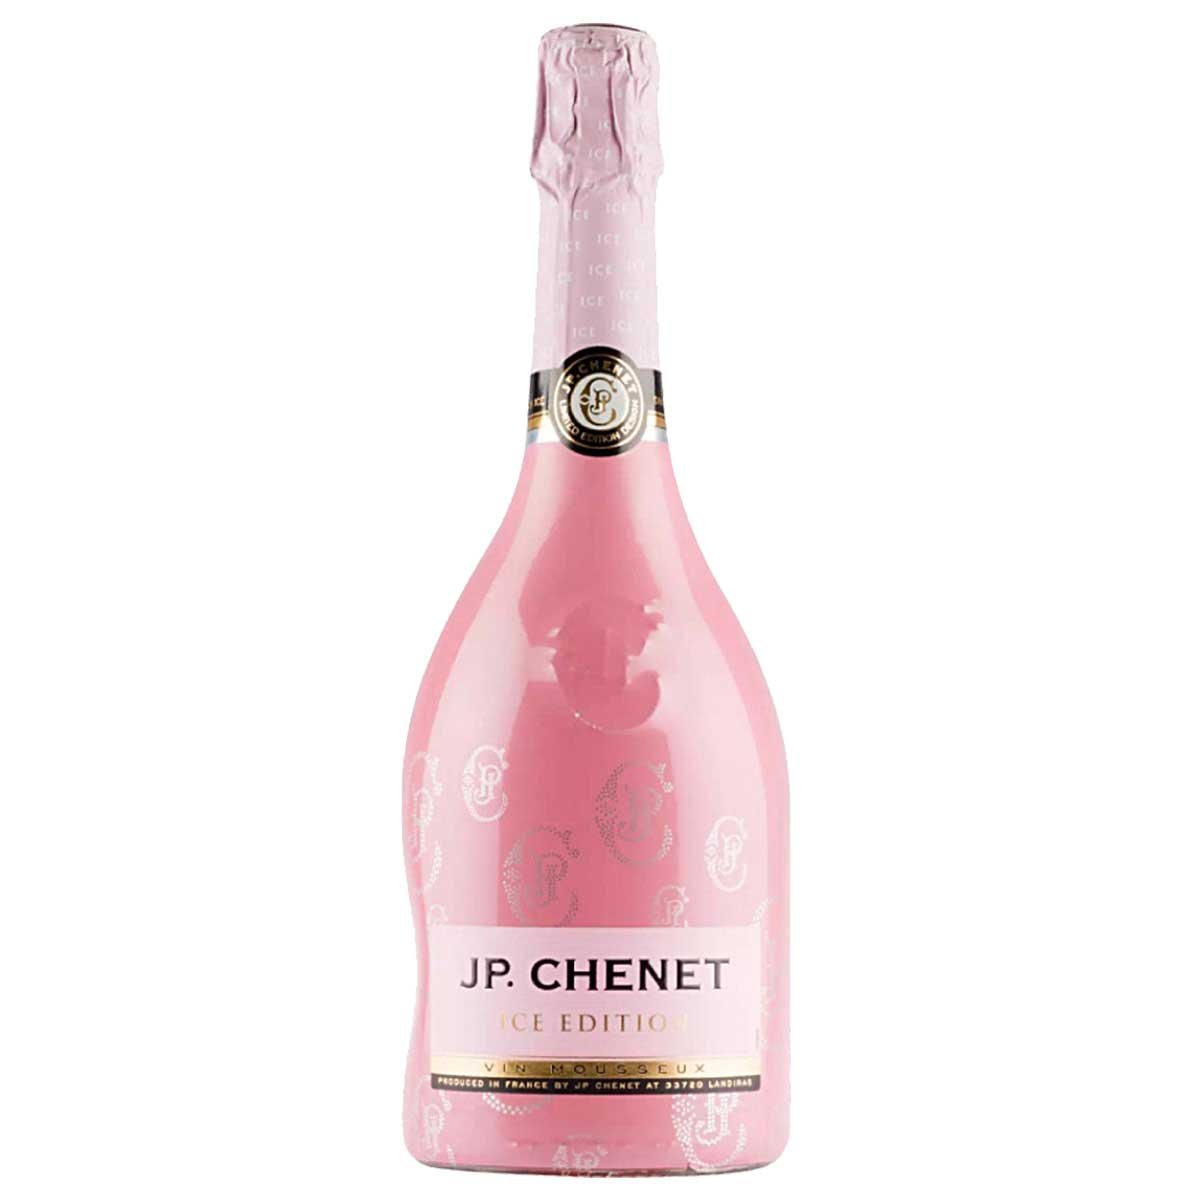 Полусладкое розовое купить. Jean Paul CHENET вино. J.P. CHENET Ice Edition. Jp CHENET Ice Edition. Вино jp CHENET Ice Edition.